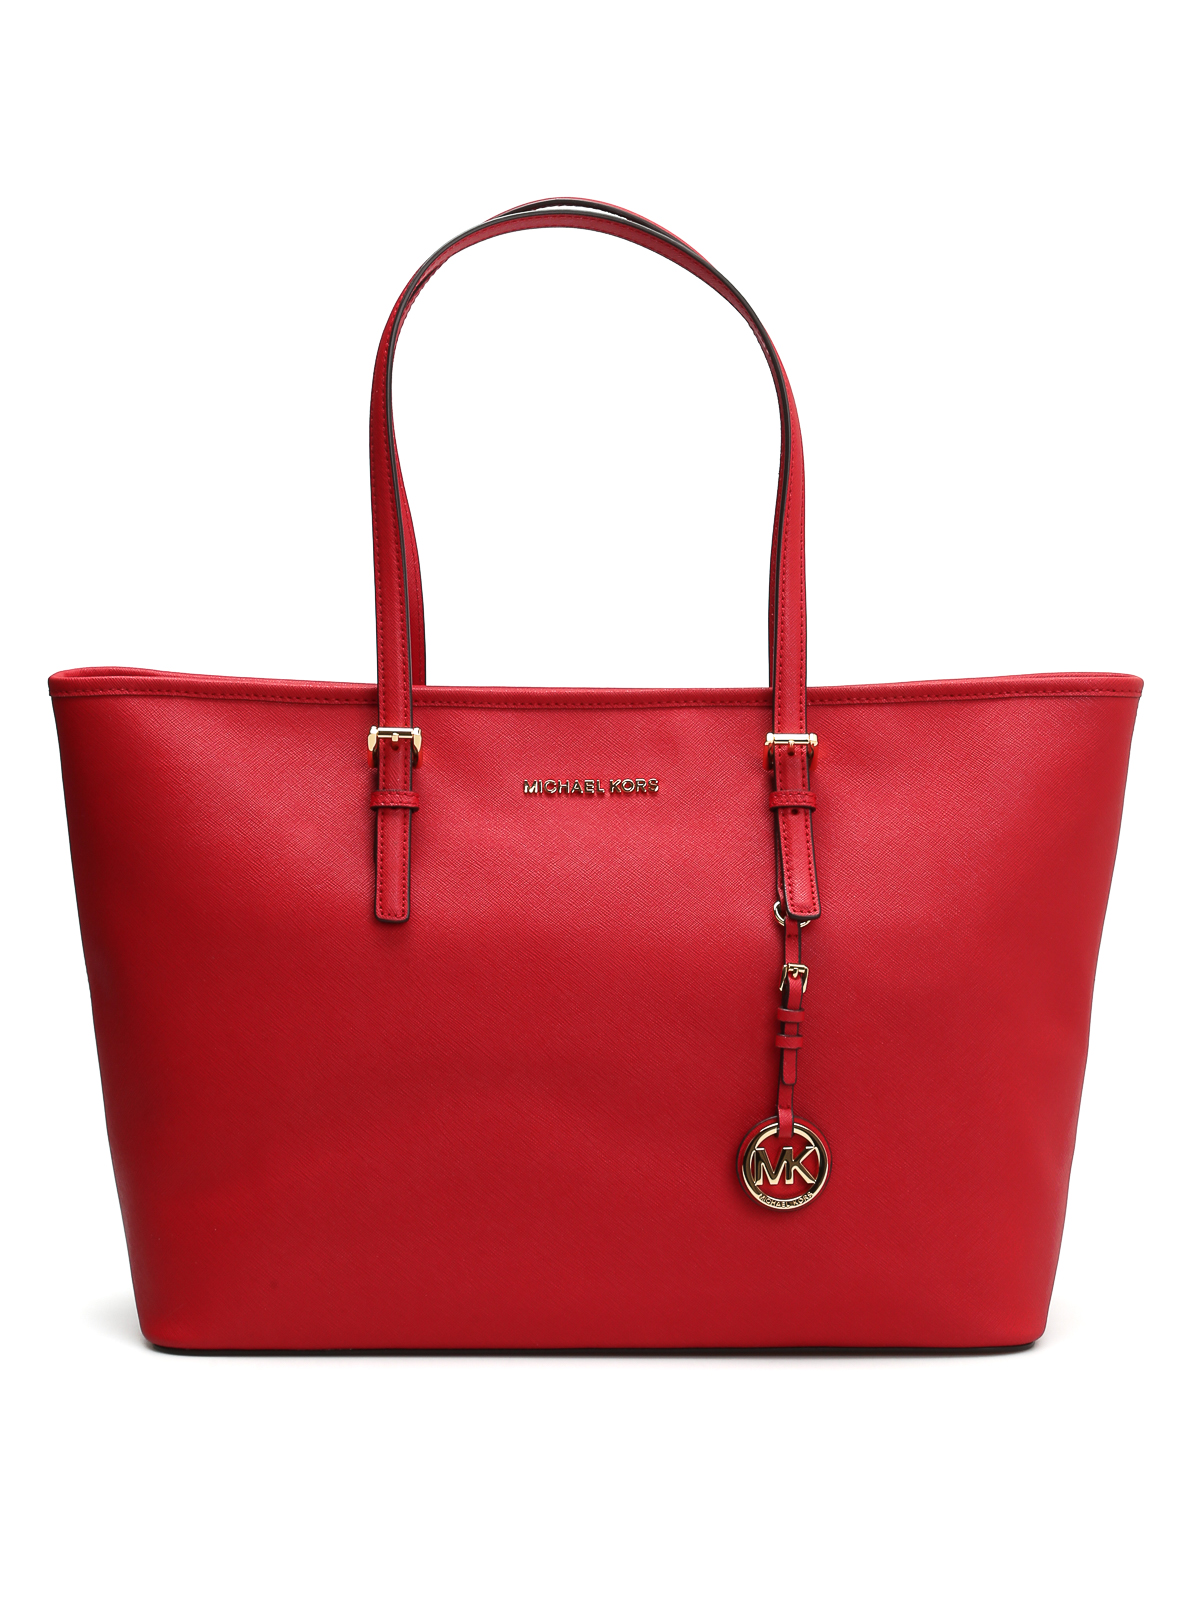 Michael Kors Jet Set Travel Chili Red Saffiano Leather/Gold-Tone Crossbody  Bag